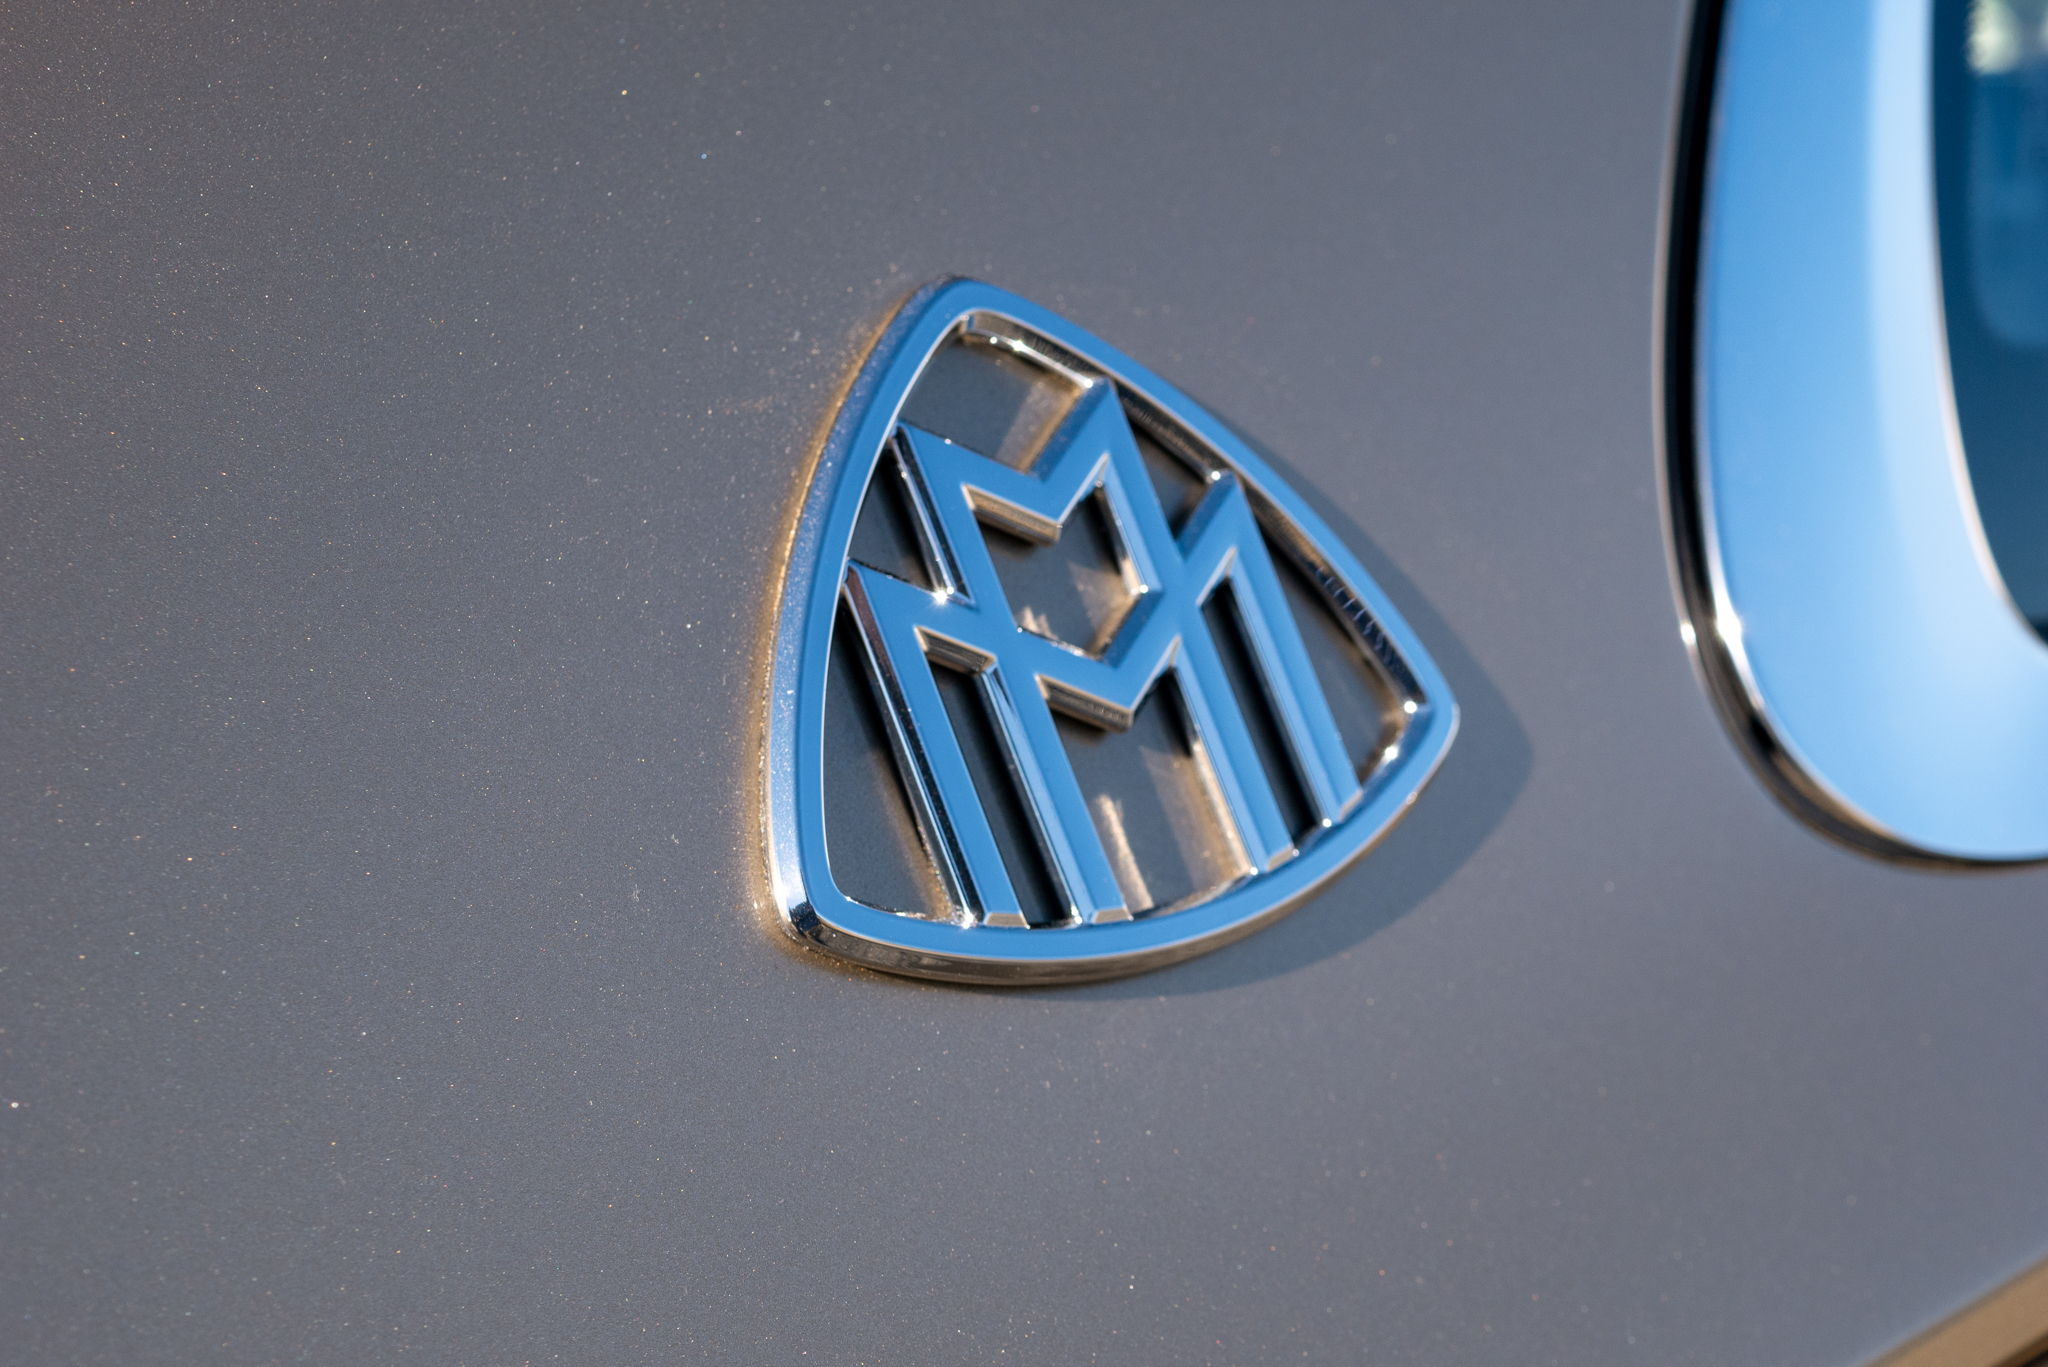 Mercedes-Maybach Reveals Their New Ultra-Luxury S-Class Sedan